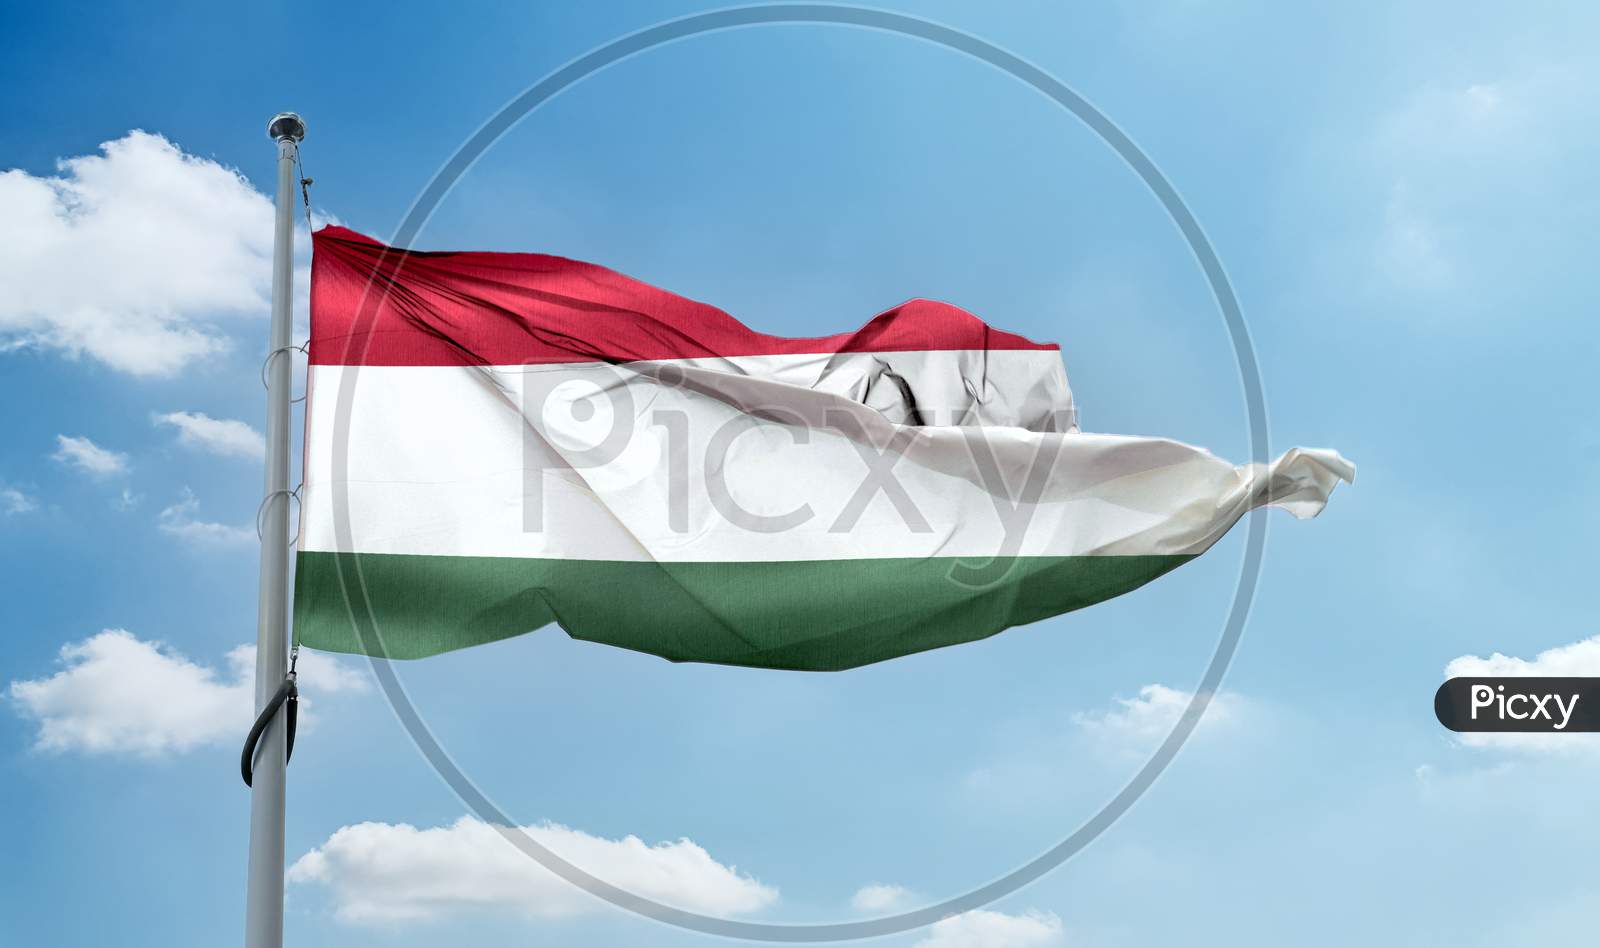 Hungary Flag - Realistic Waving Fabric Flag.